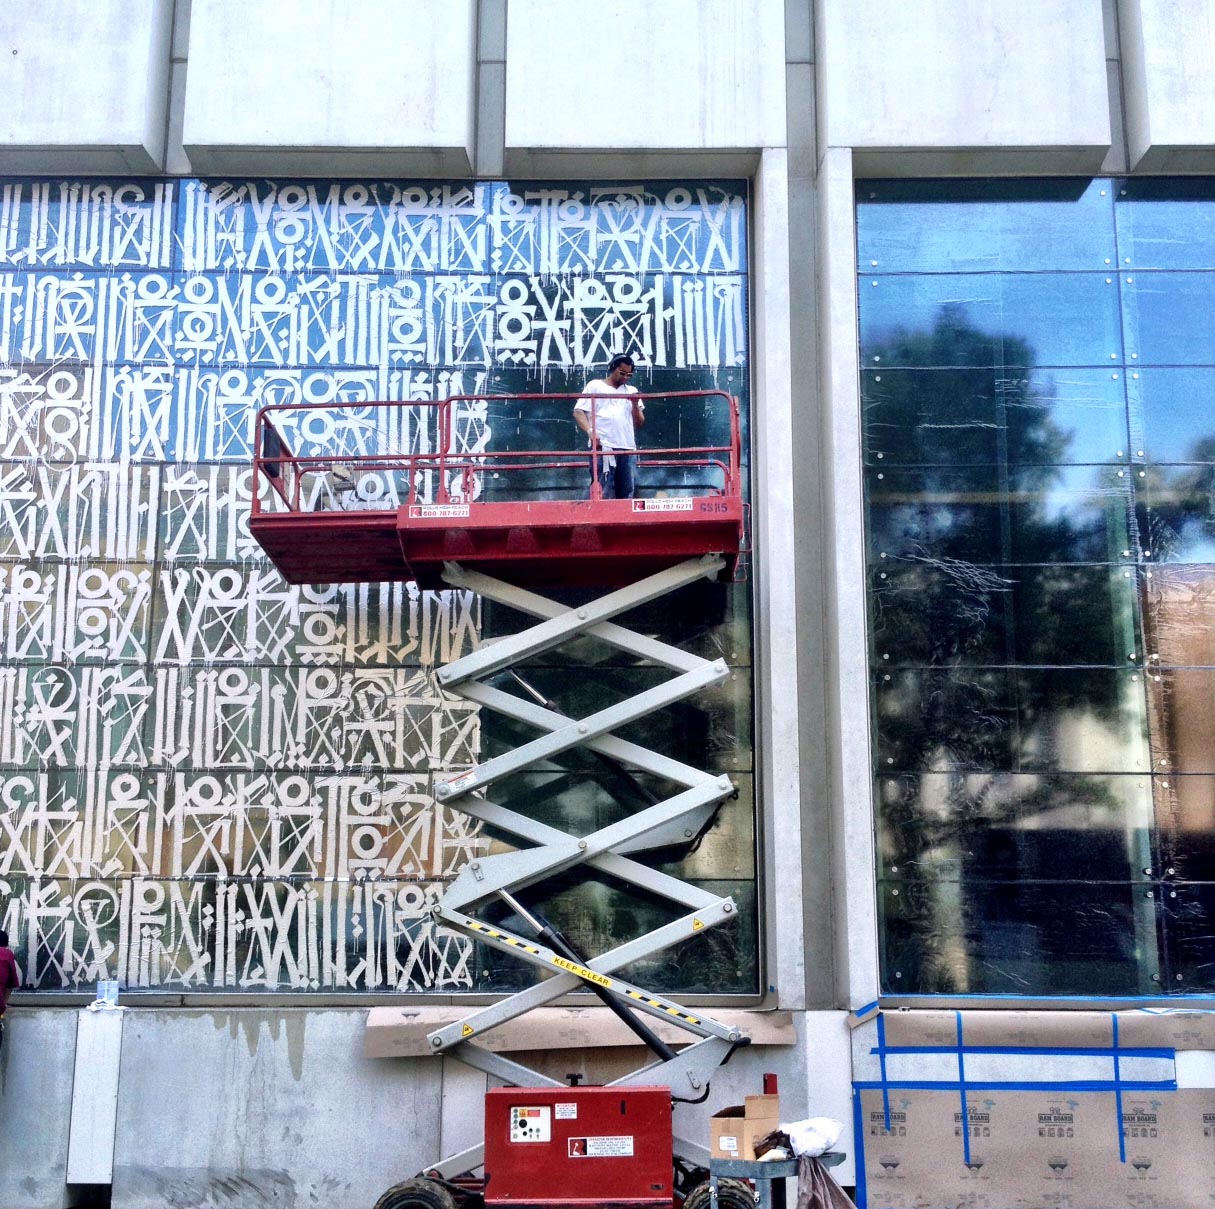 RETNA New Mural In Progress, Los Angeles – StreetArtNews